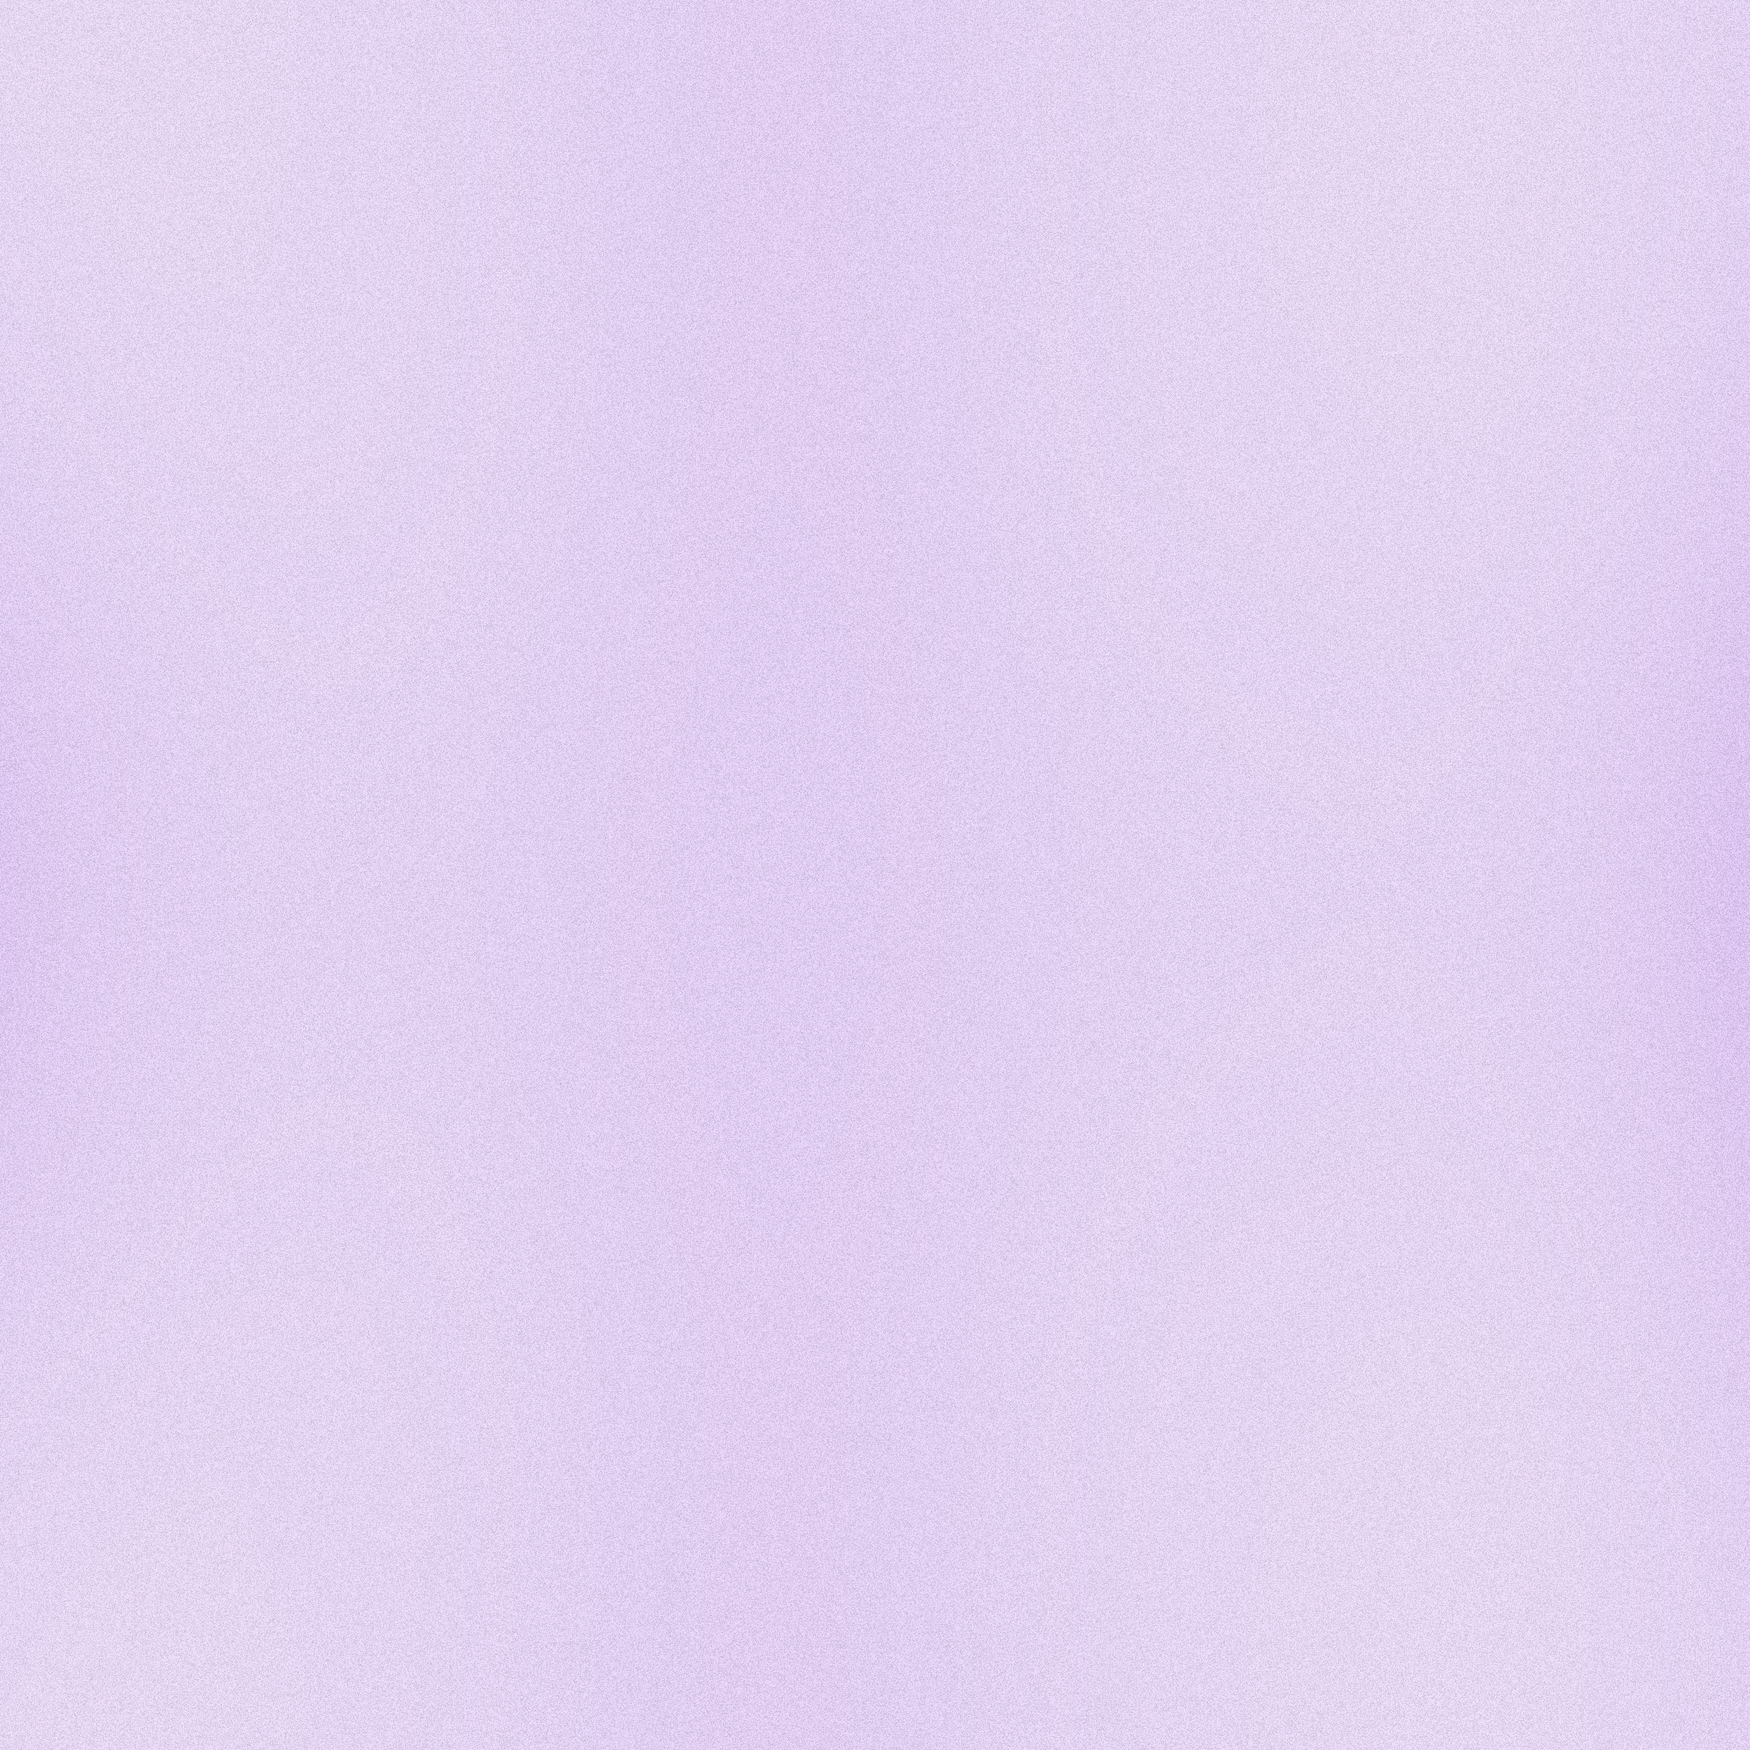 Bright Lavender Soft Blur Background